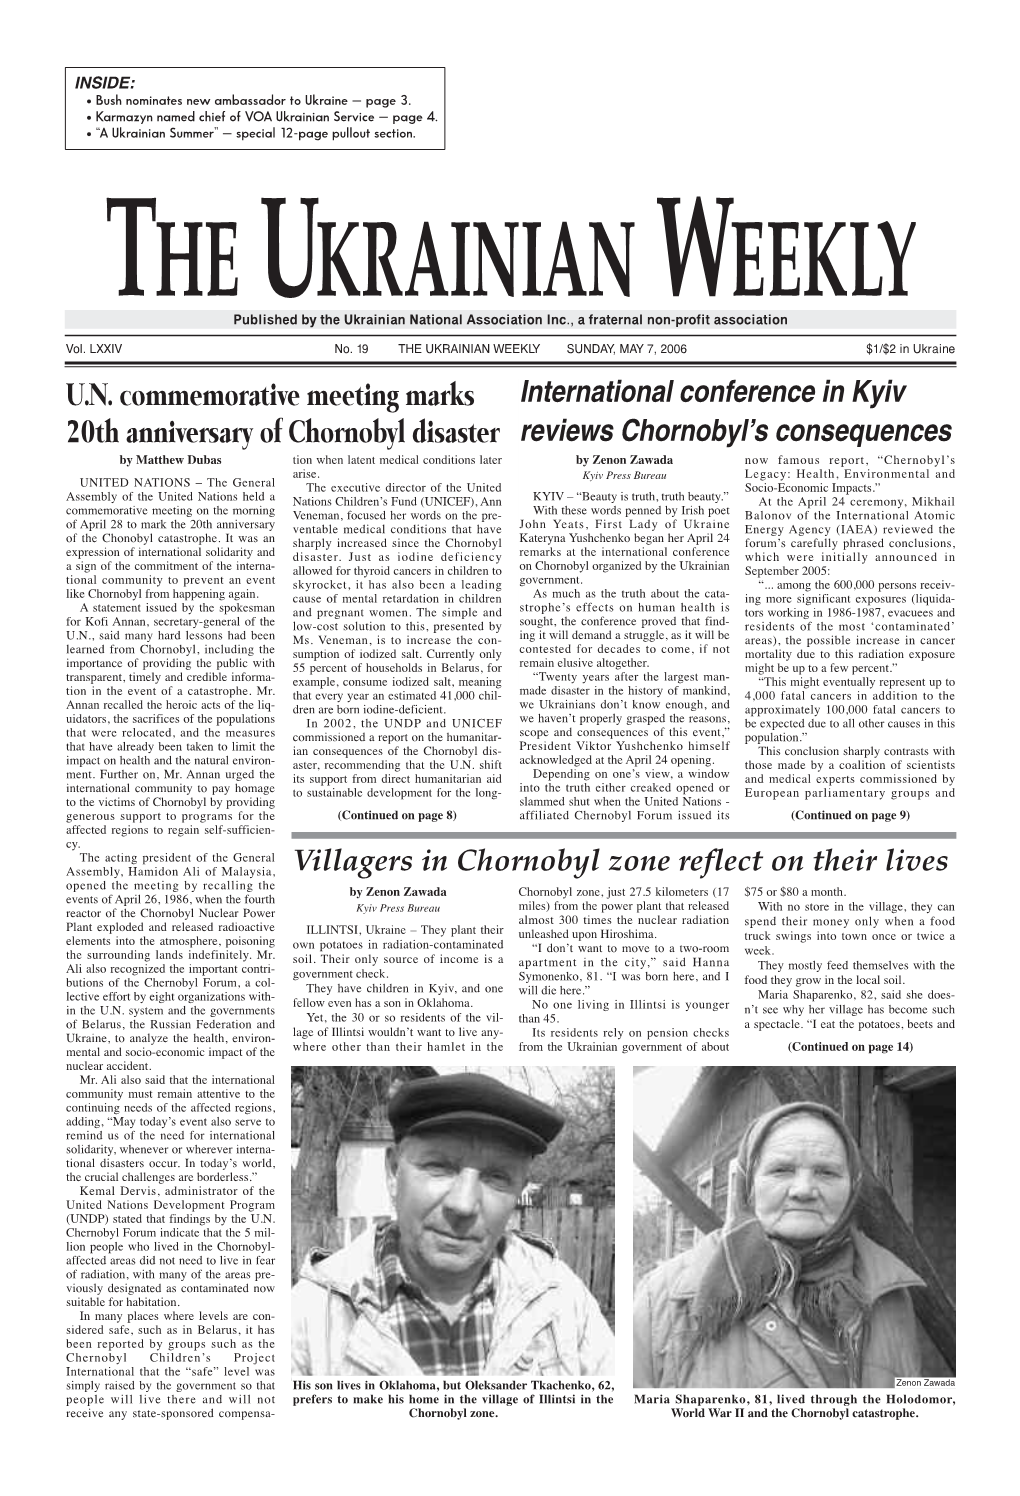 The Ukrainian Weekly 2006, No.19